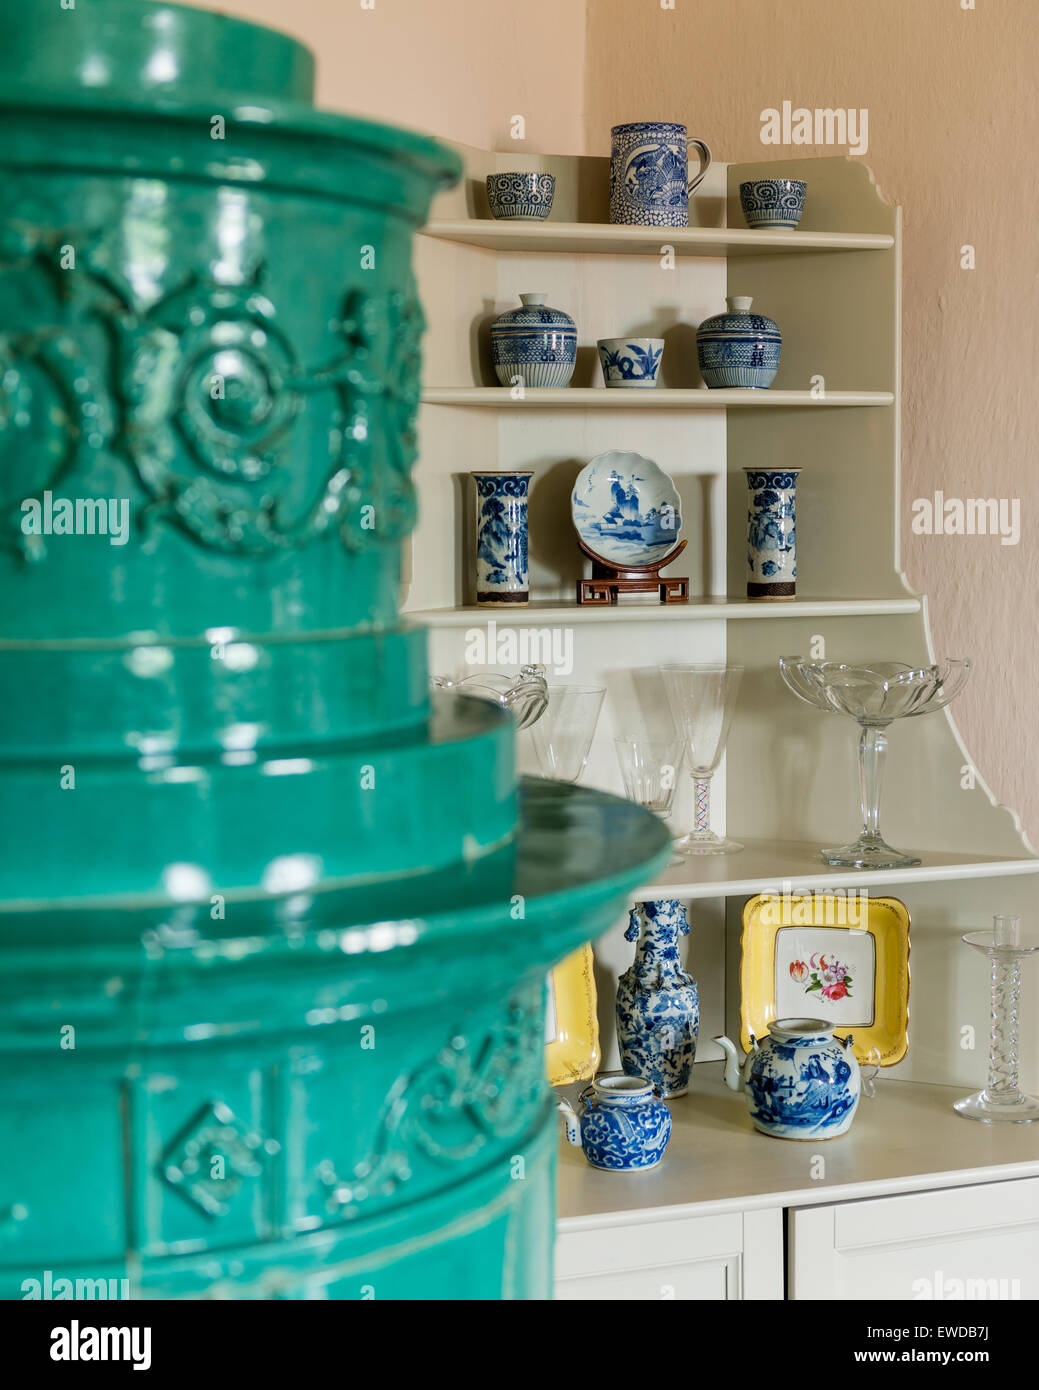 Detail of turquoise ceramic antique stove Stock Photo